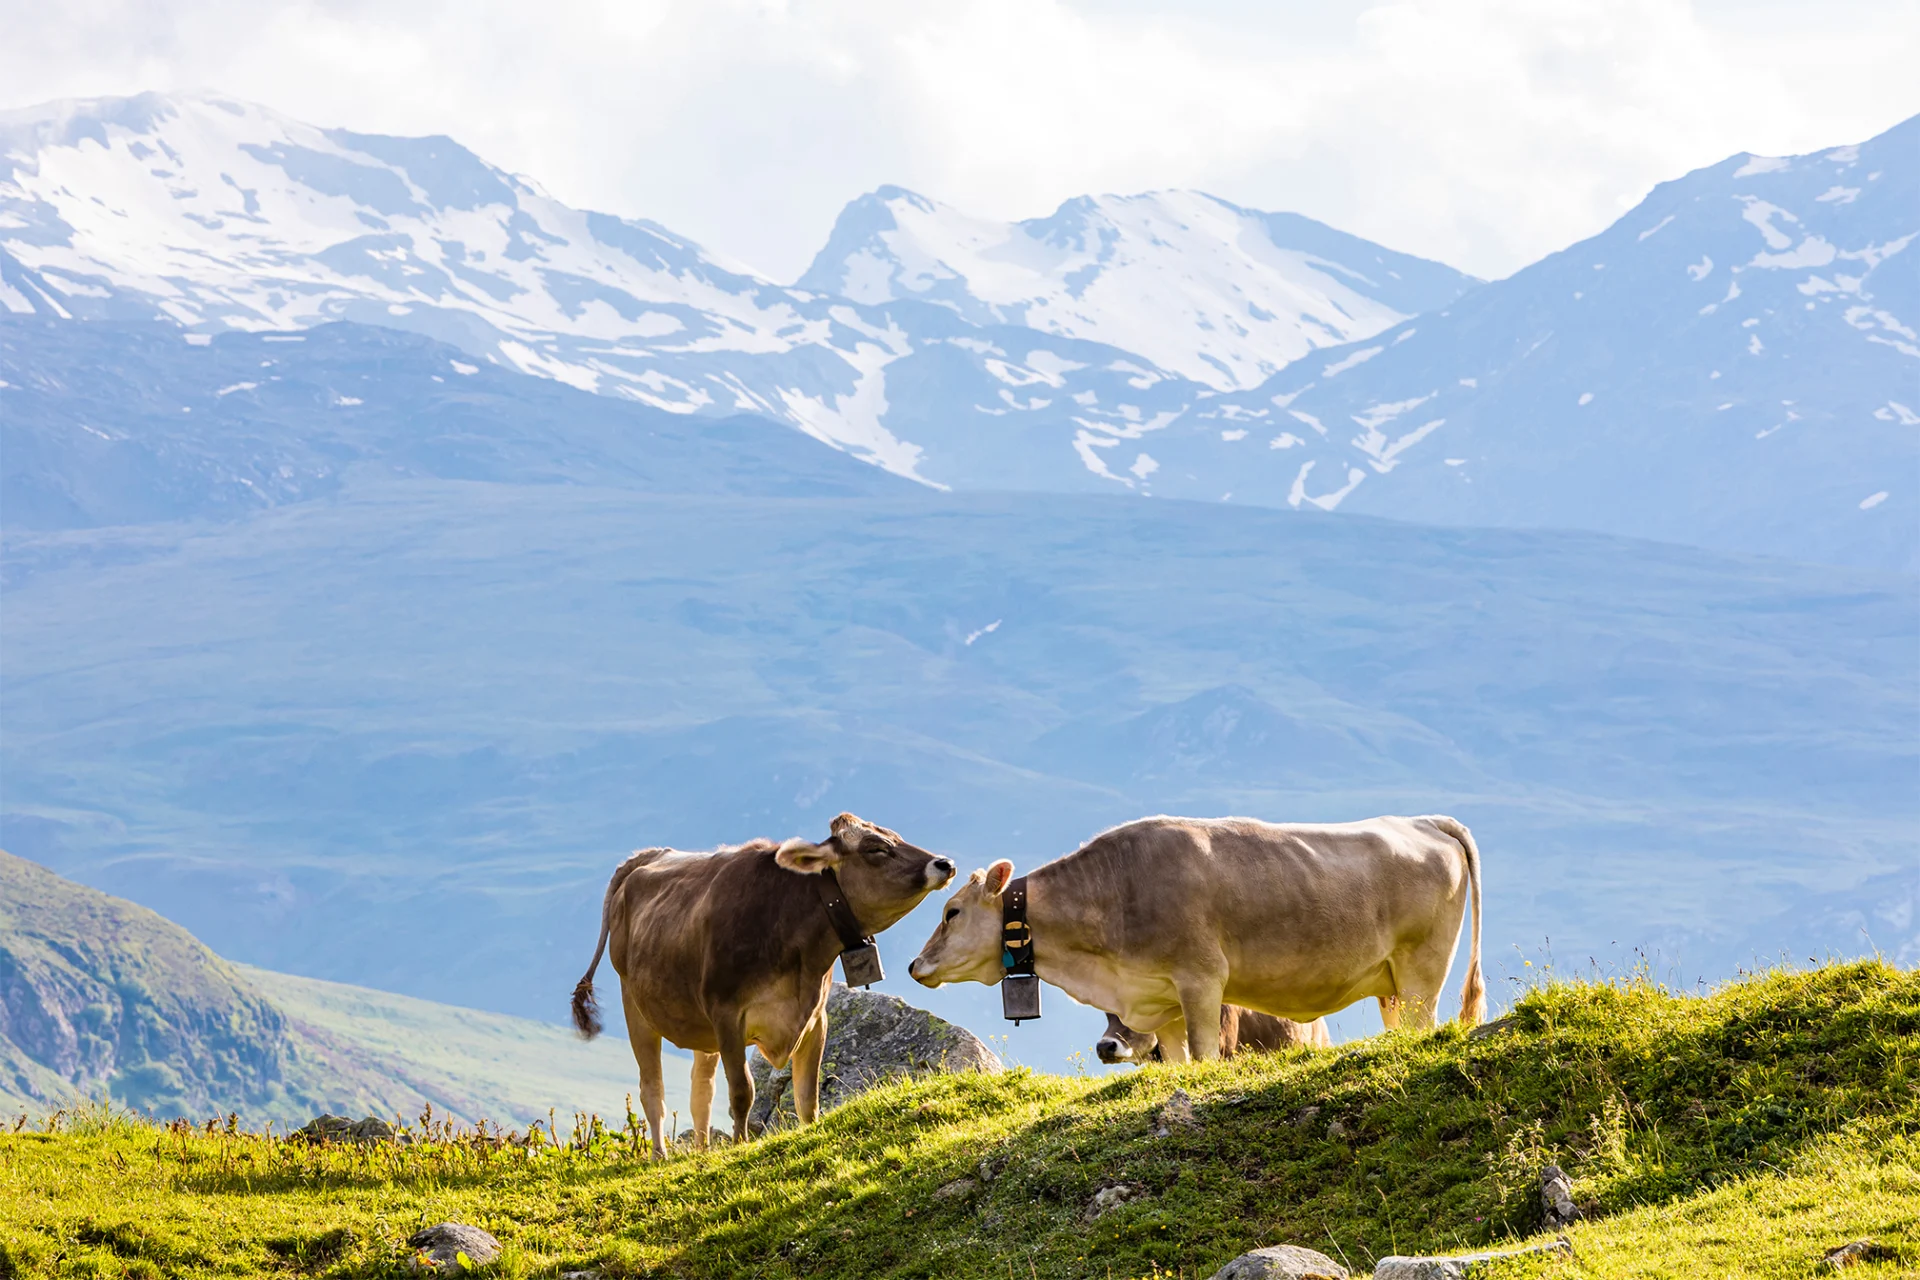 Two cows meet on an alp.